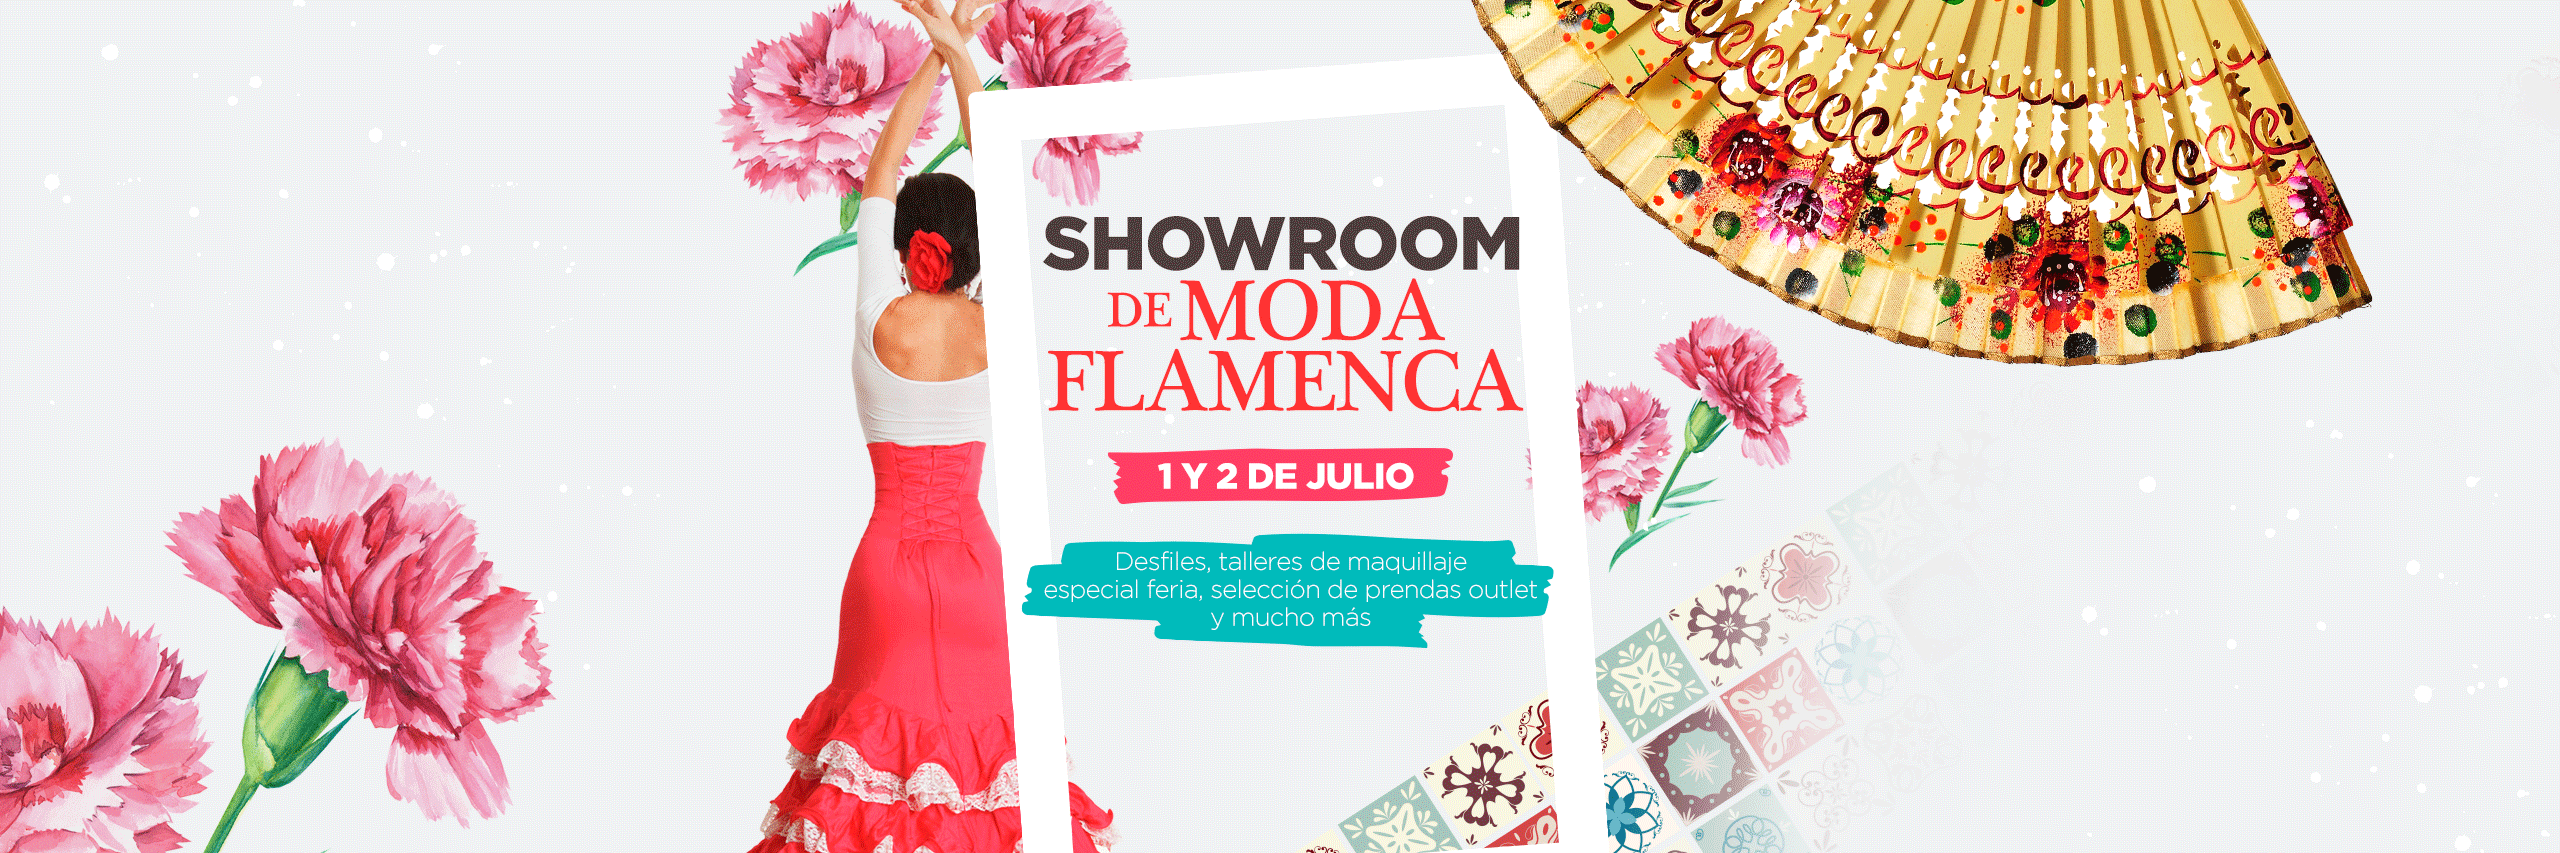 showroom moda flamenca